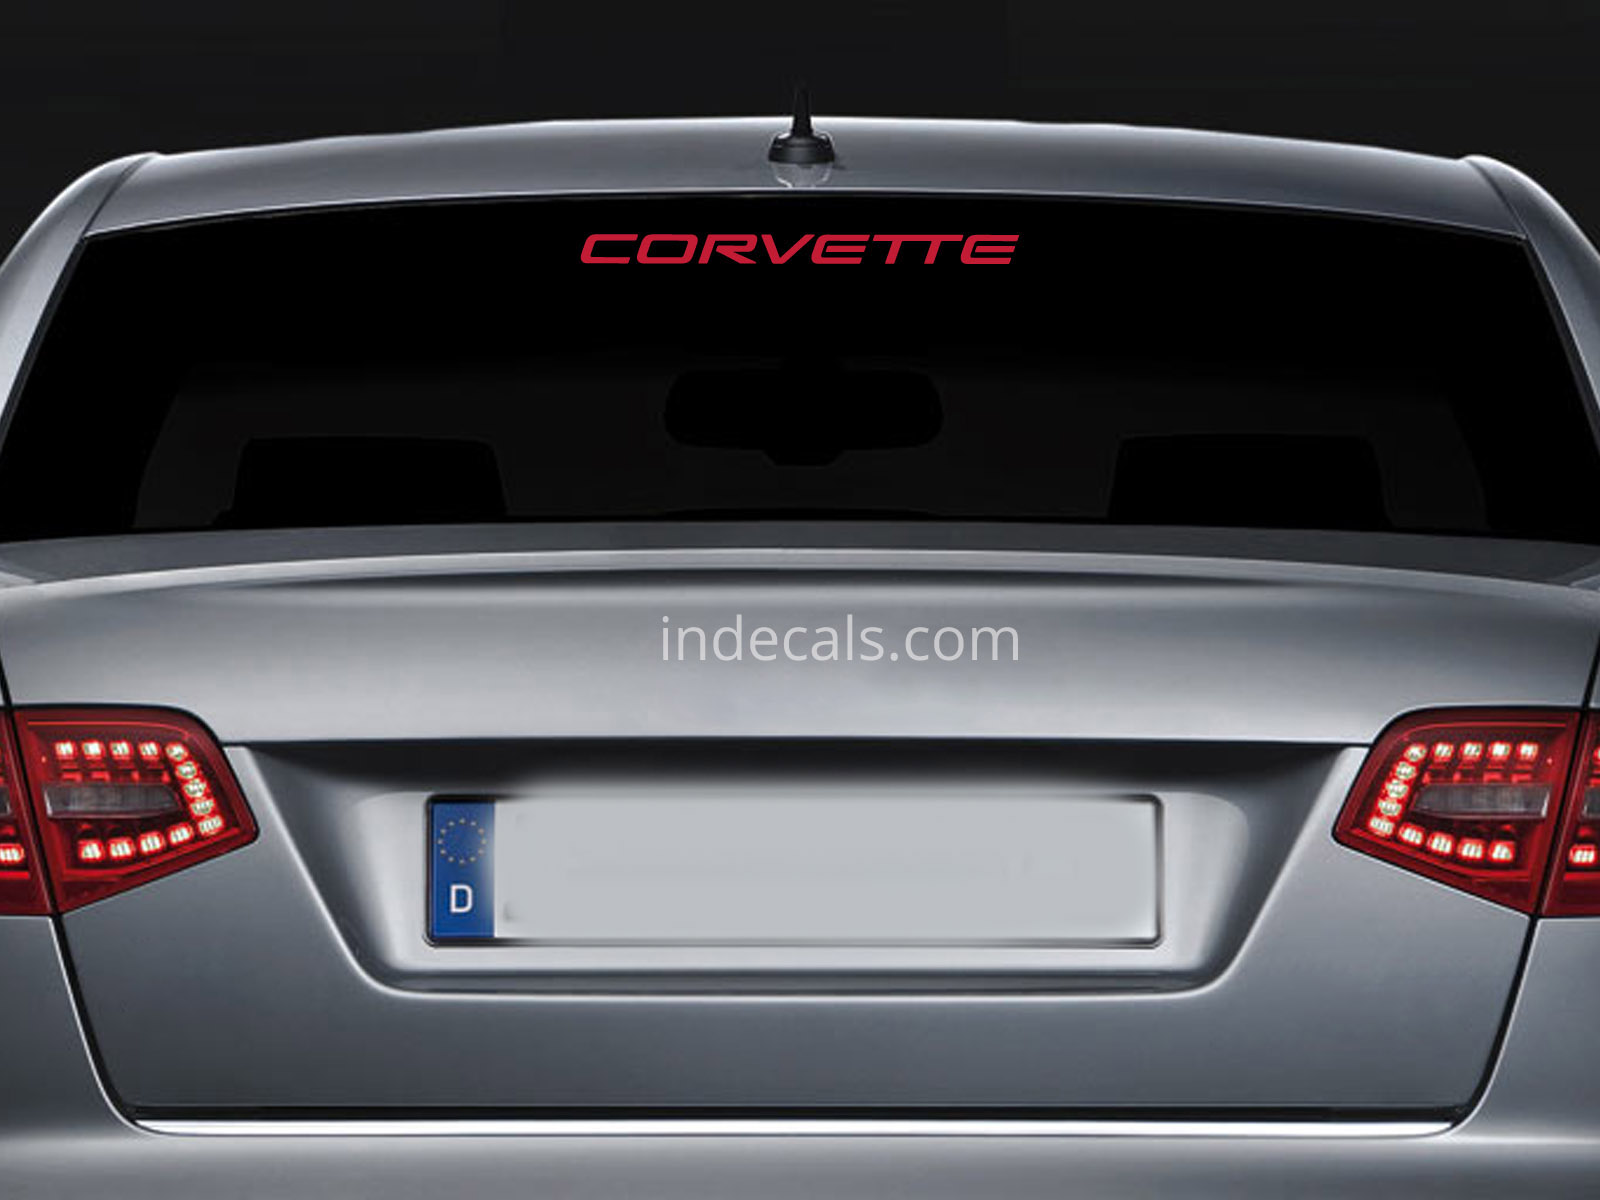 1 x Corvette Sticker for Windshield or Back Window - Red